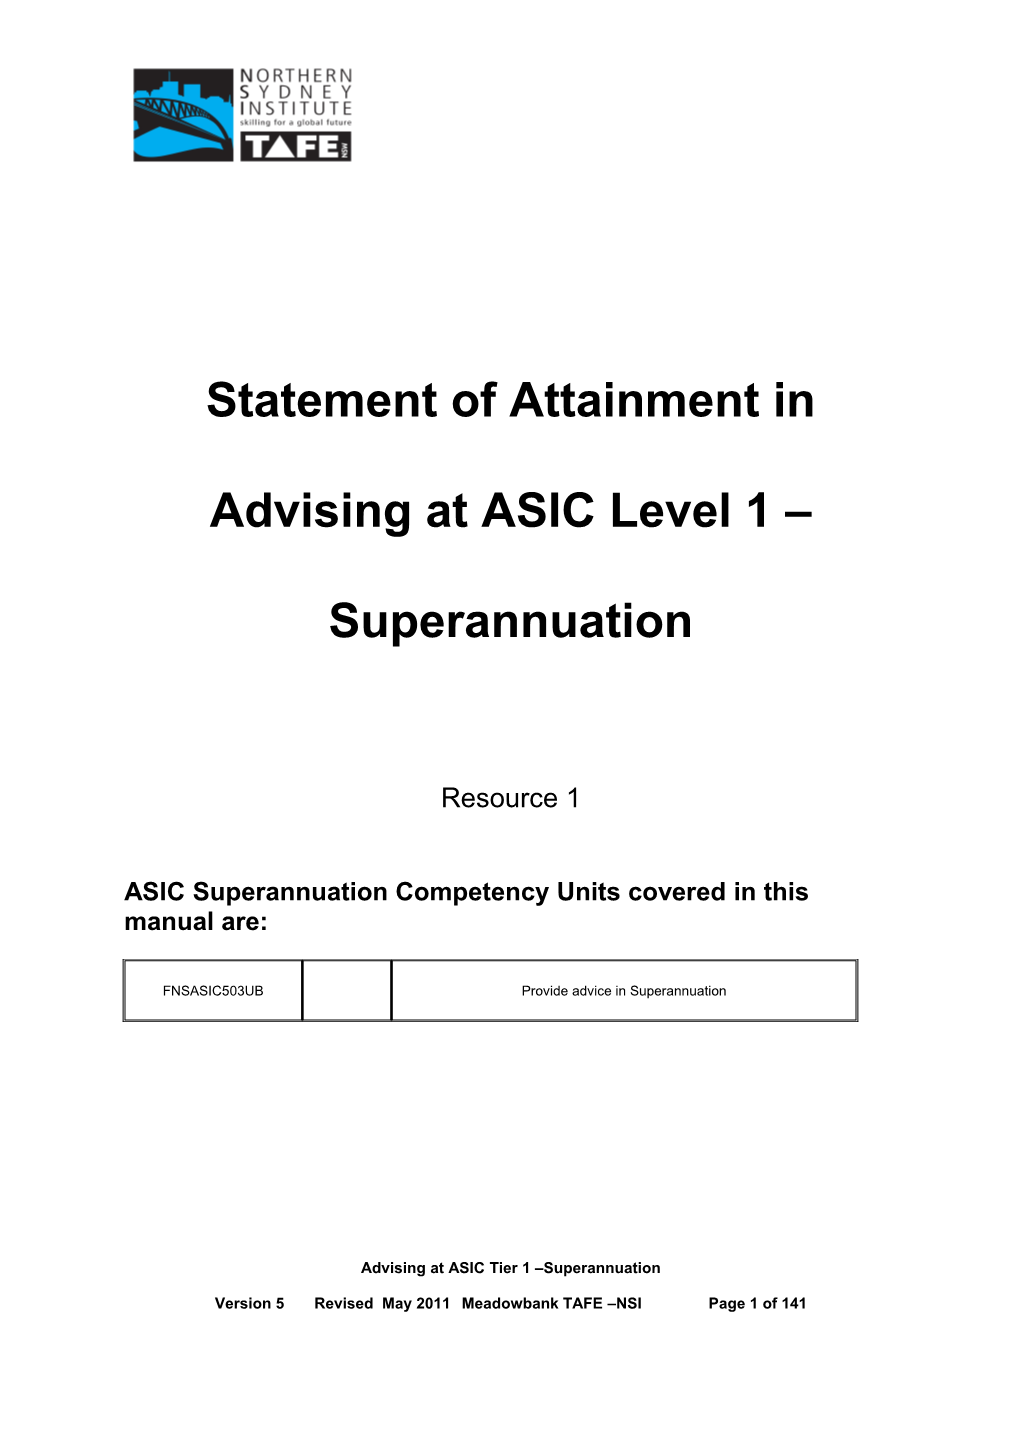 Statement of Attainment in Advising at ASIC Level 1 Superannuation